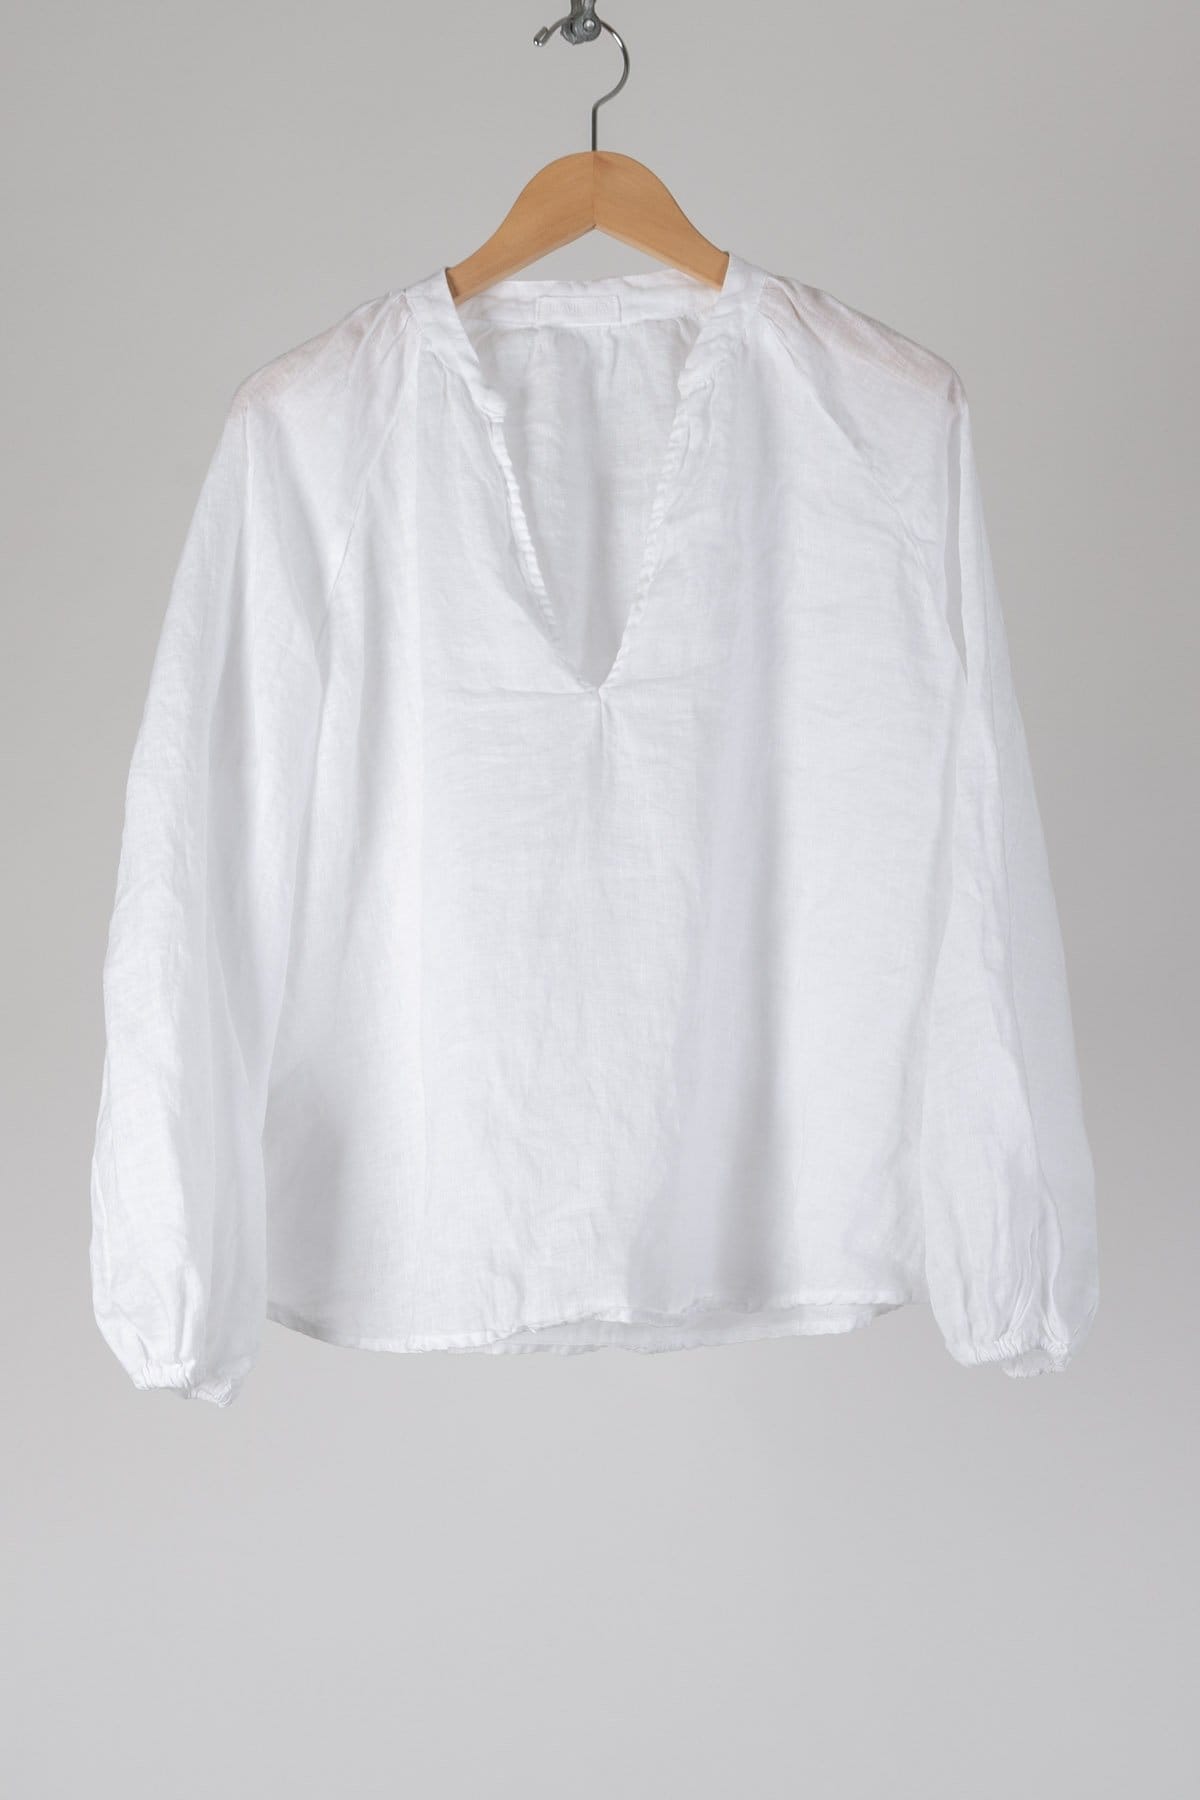 balloon sleeve white linen shirt